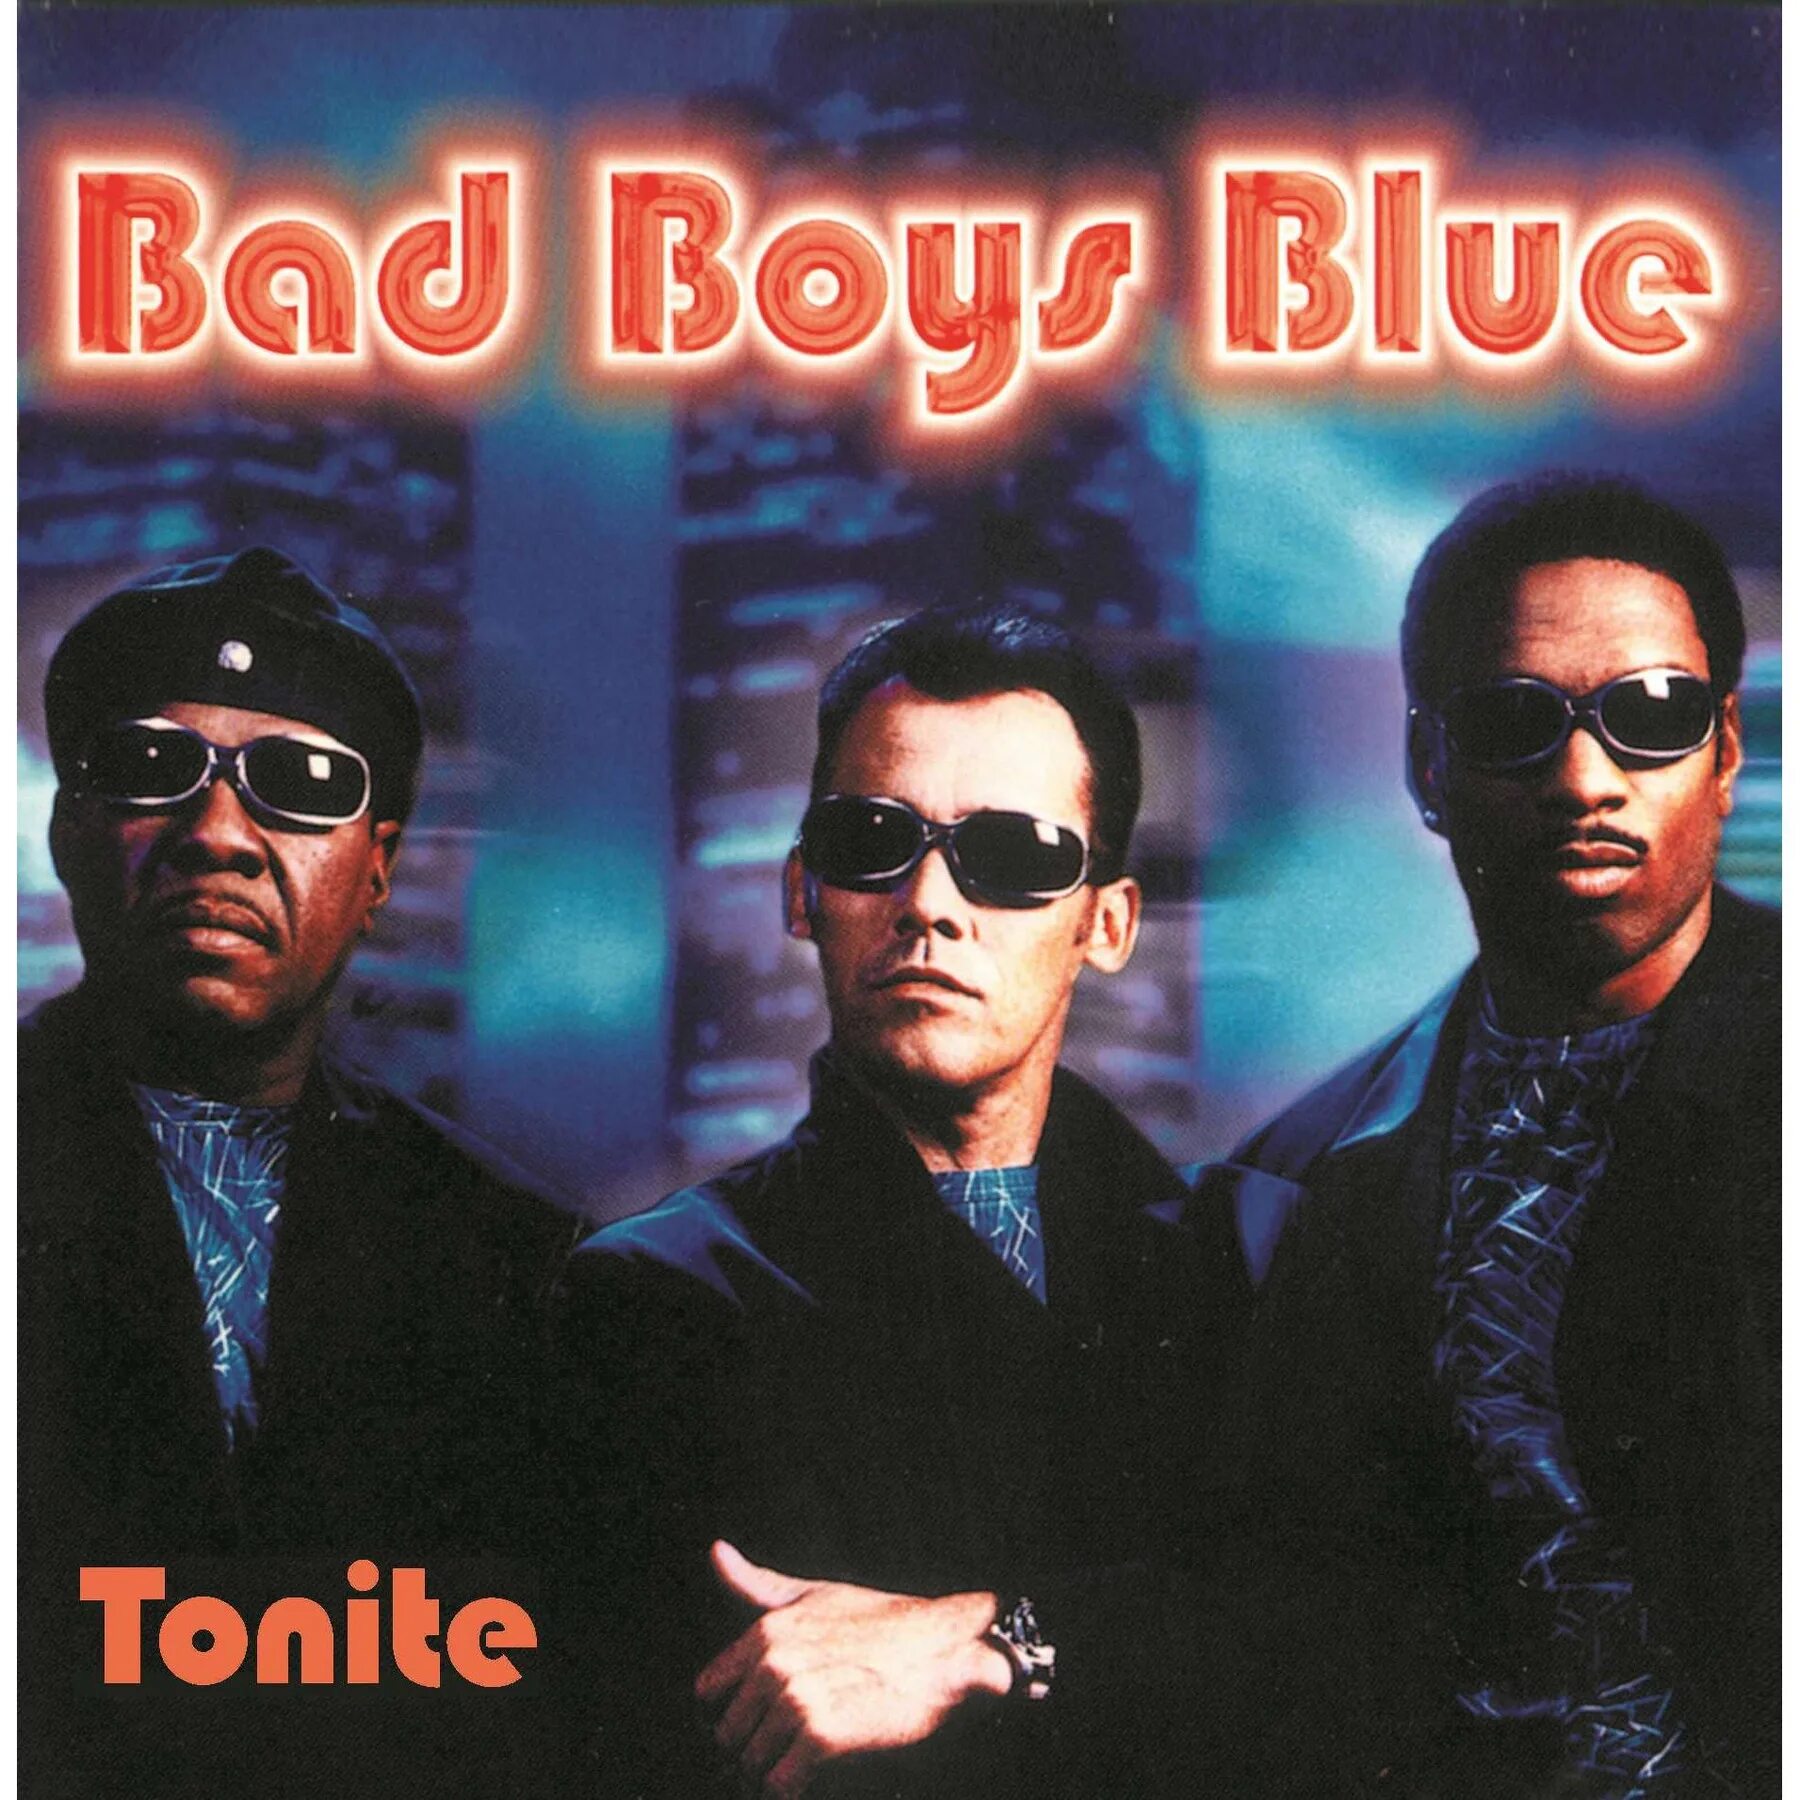 Группа bad boys blue. Обложки альбомов гр. Bad boys Blue. Бед бойс Блю 80-е. Bad boys Blue 1993 Bad boys Blue.